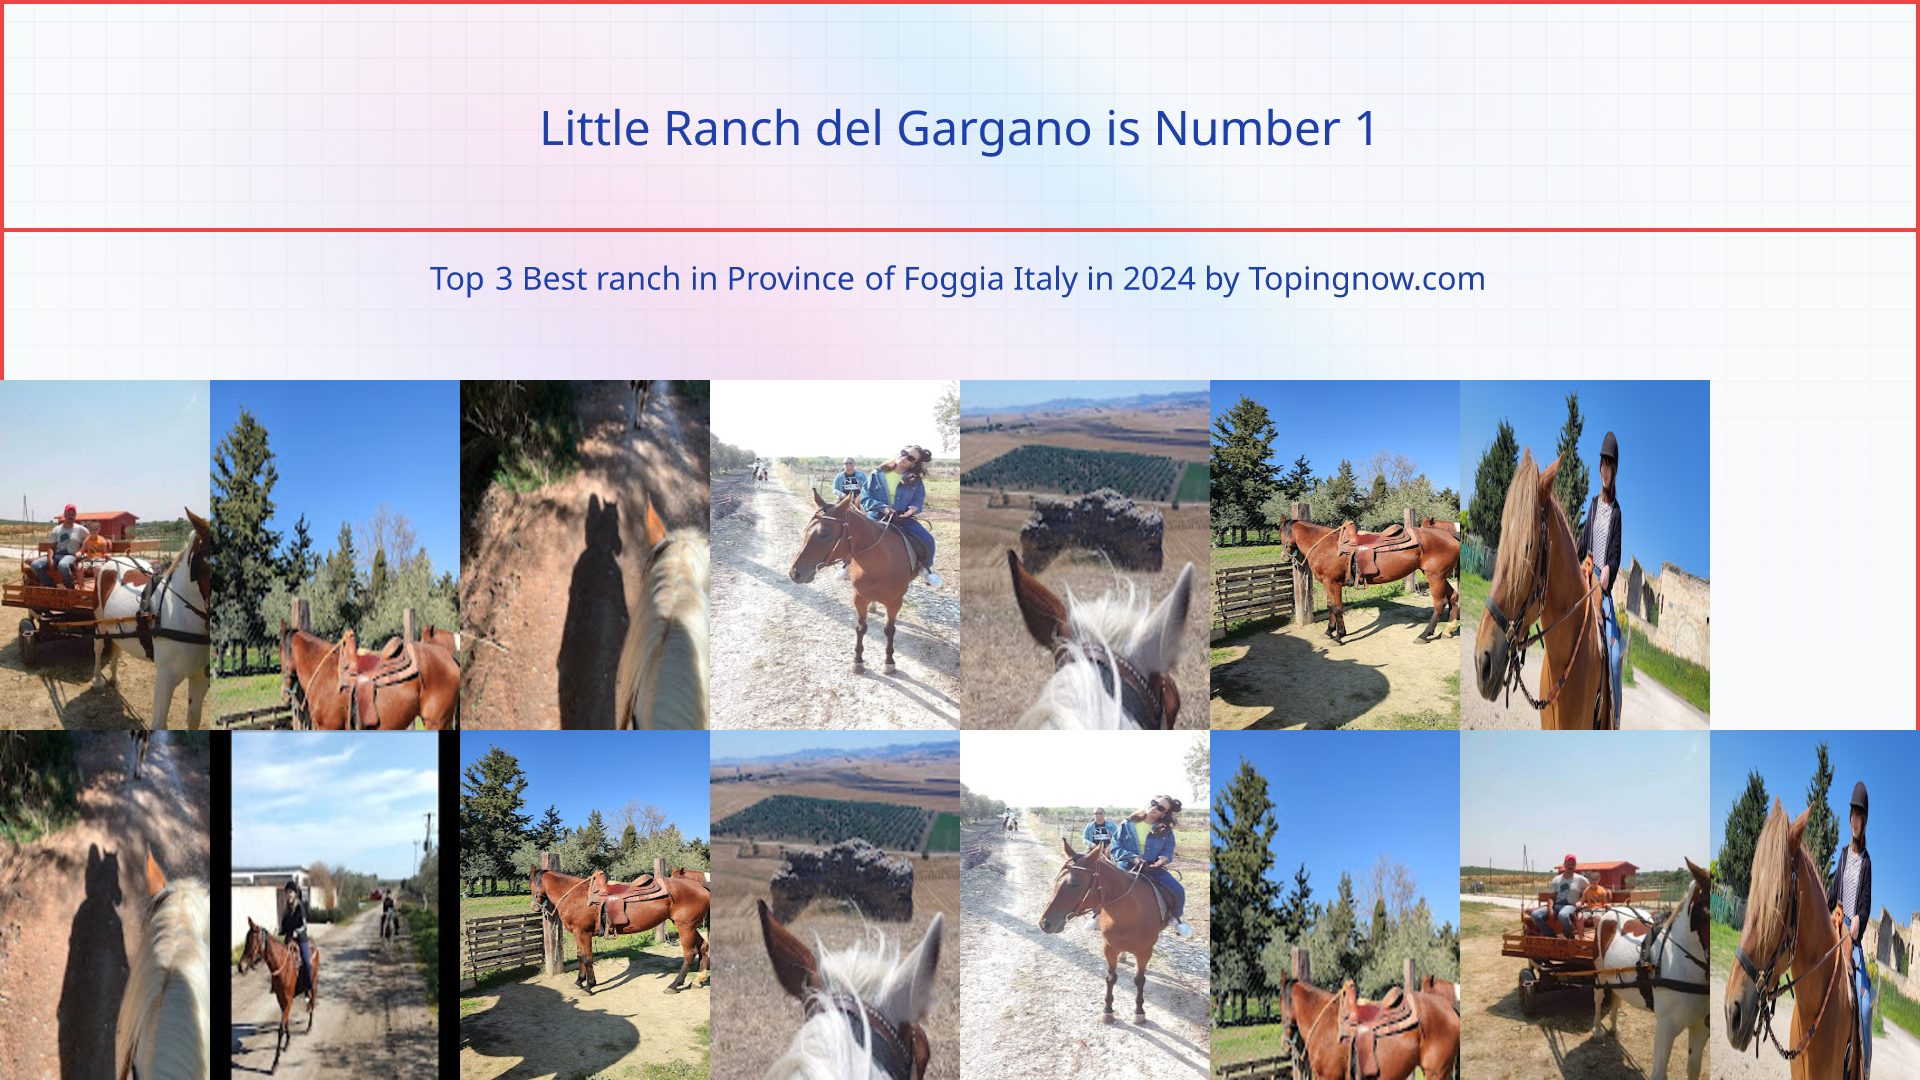 Little Ranch del Gargano: Top 3 Best ranch in Province of Foggia Italy in 2024